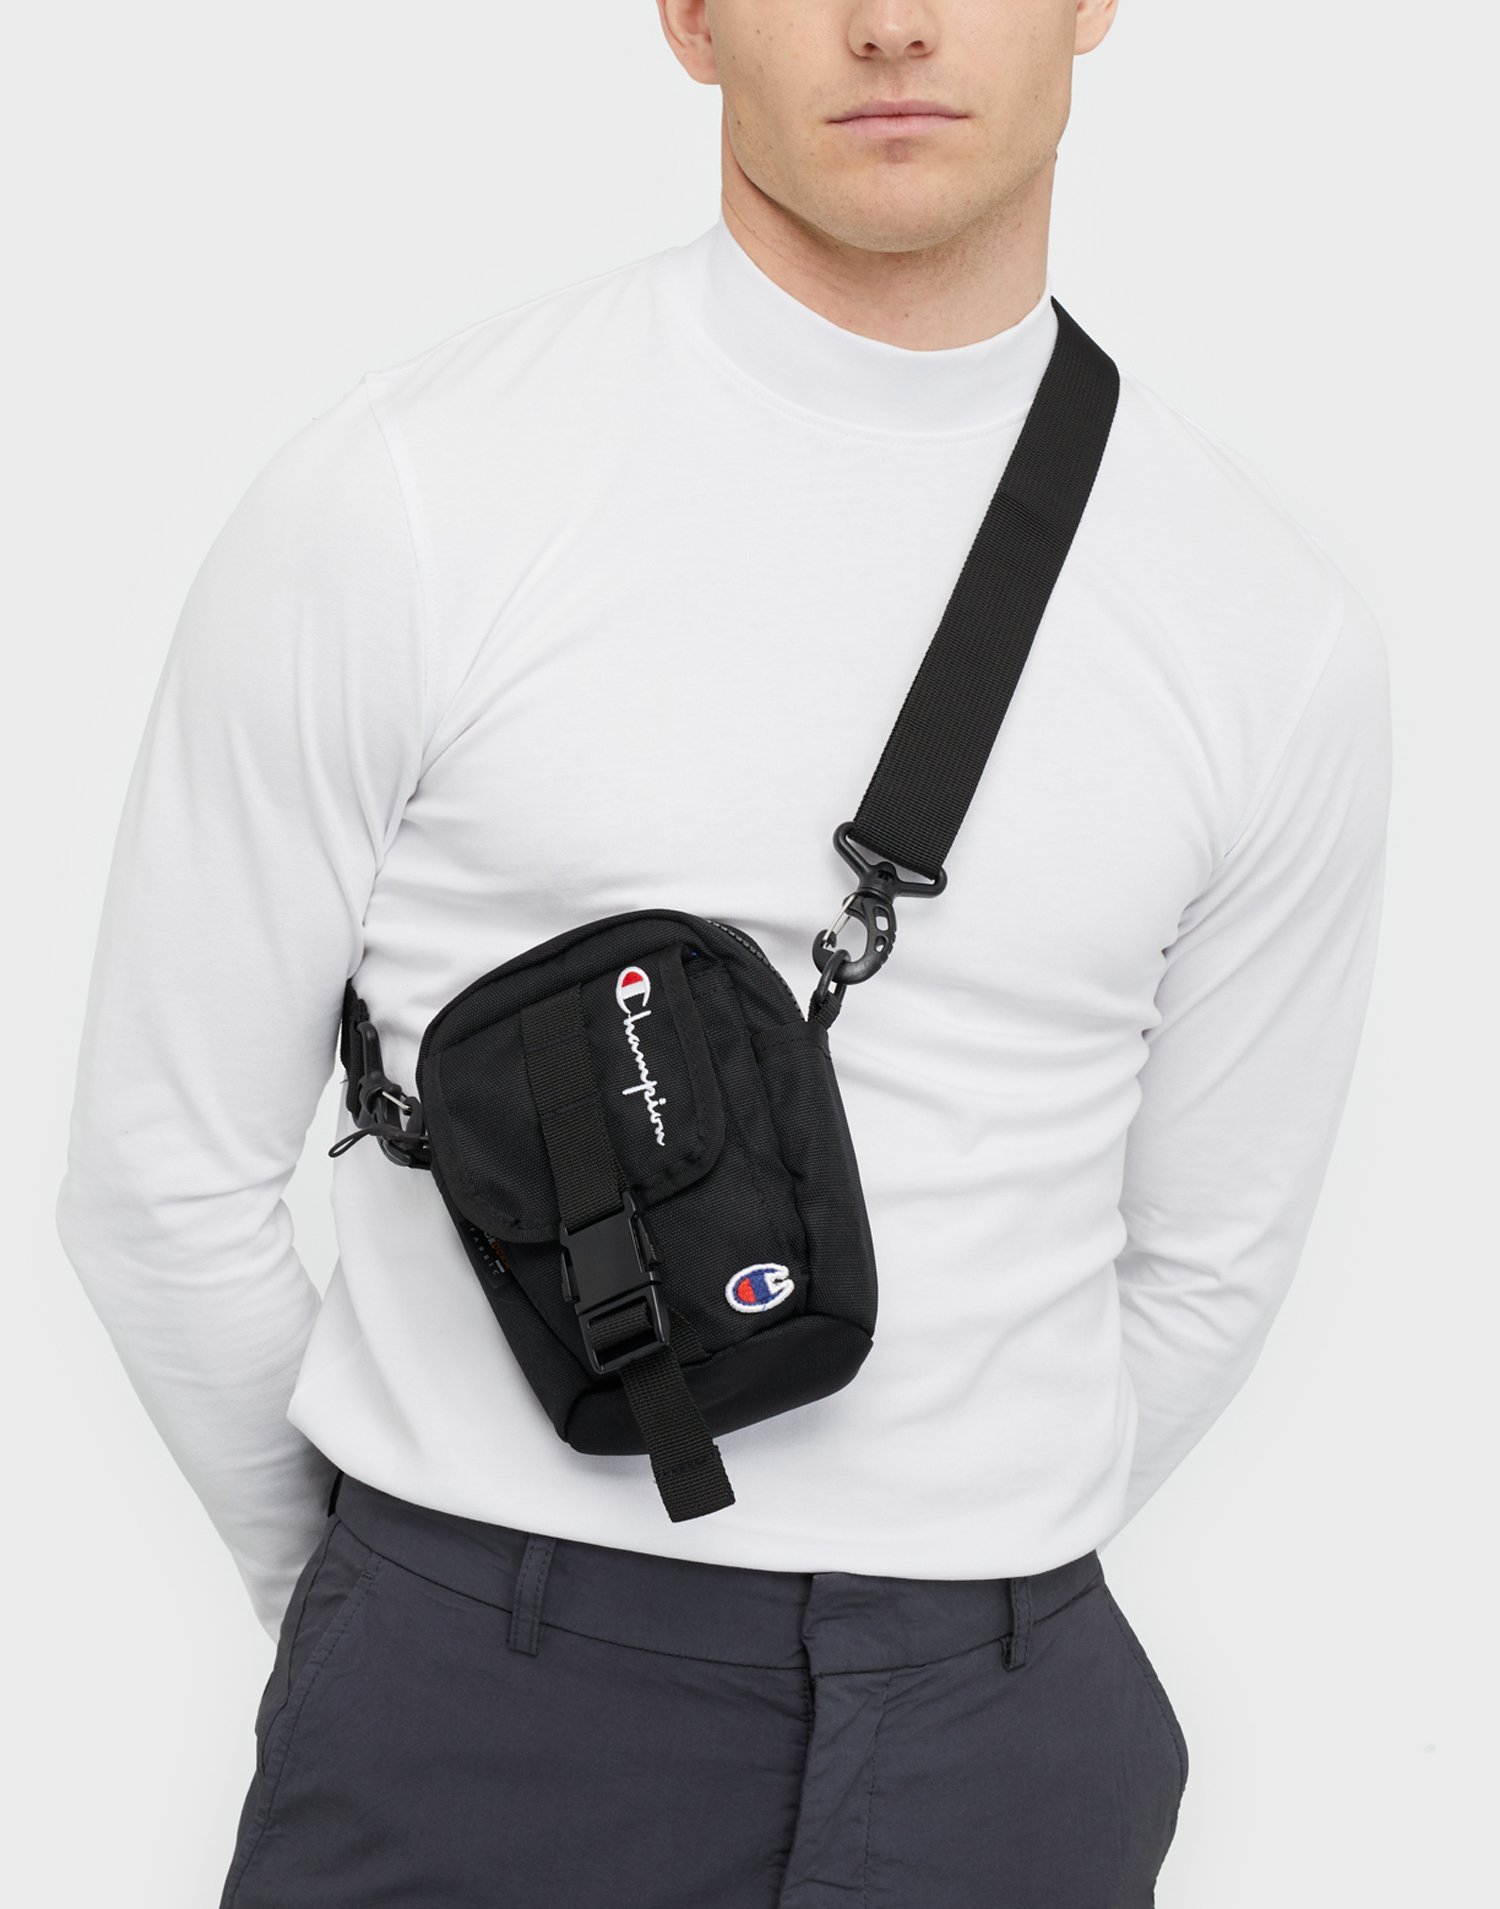 champion mini shoulder bag